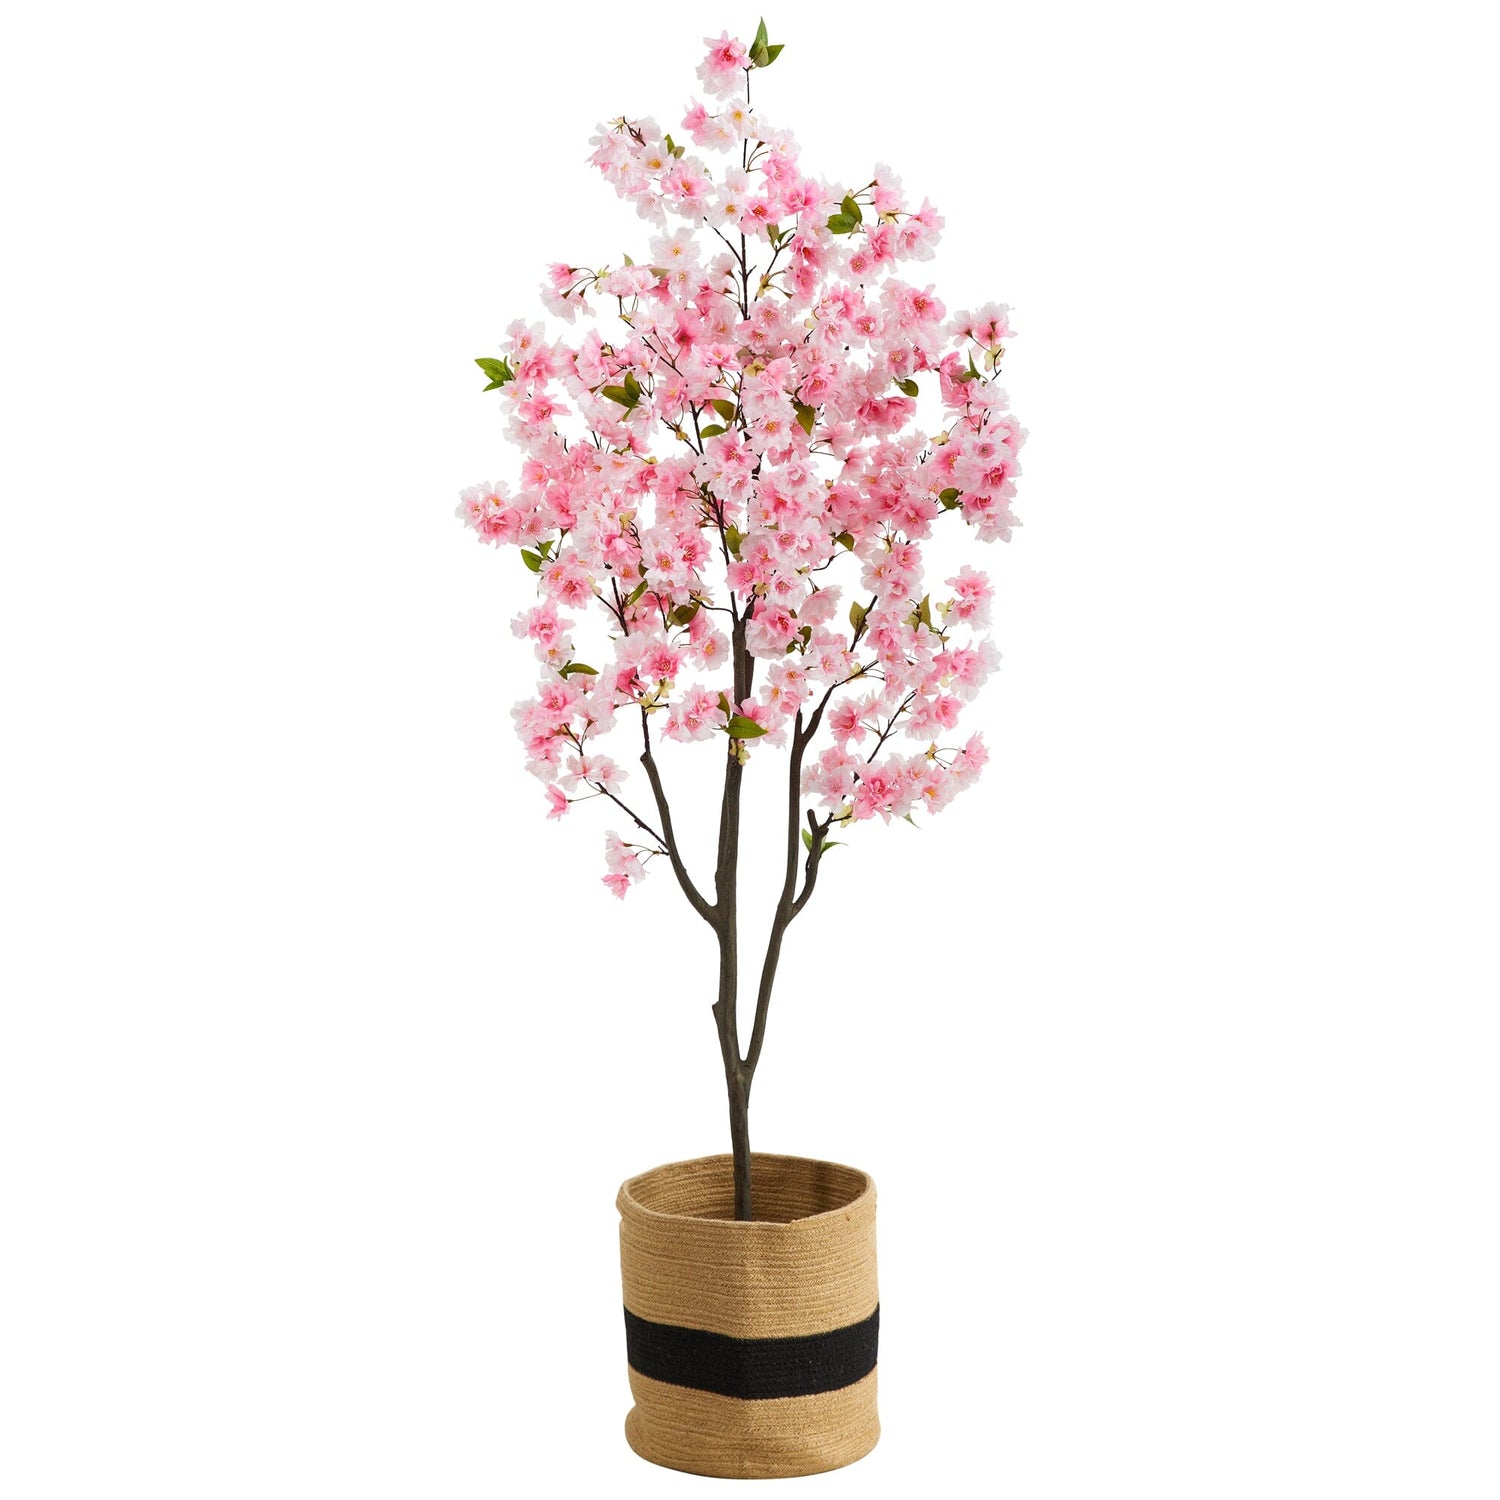 6’ Artificial Cherry Blossom Tree with Handmade Jute & Cotton Basket